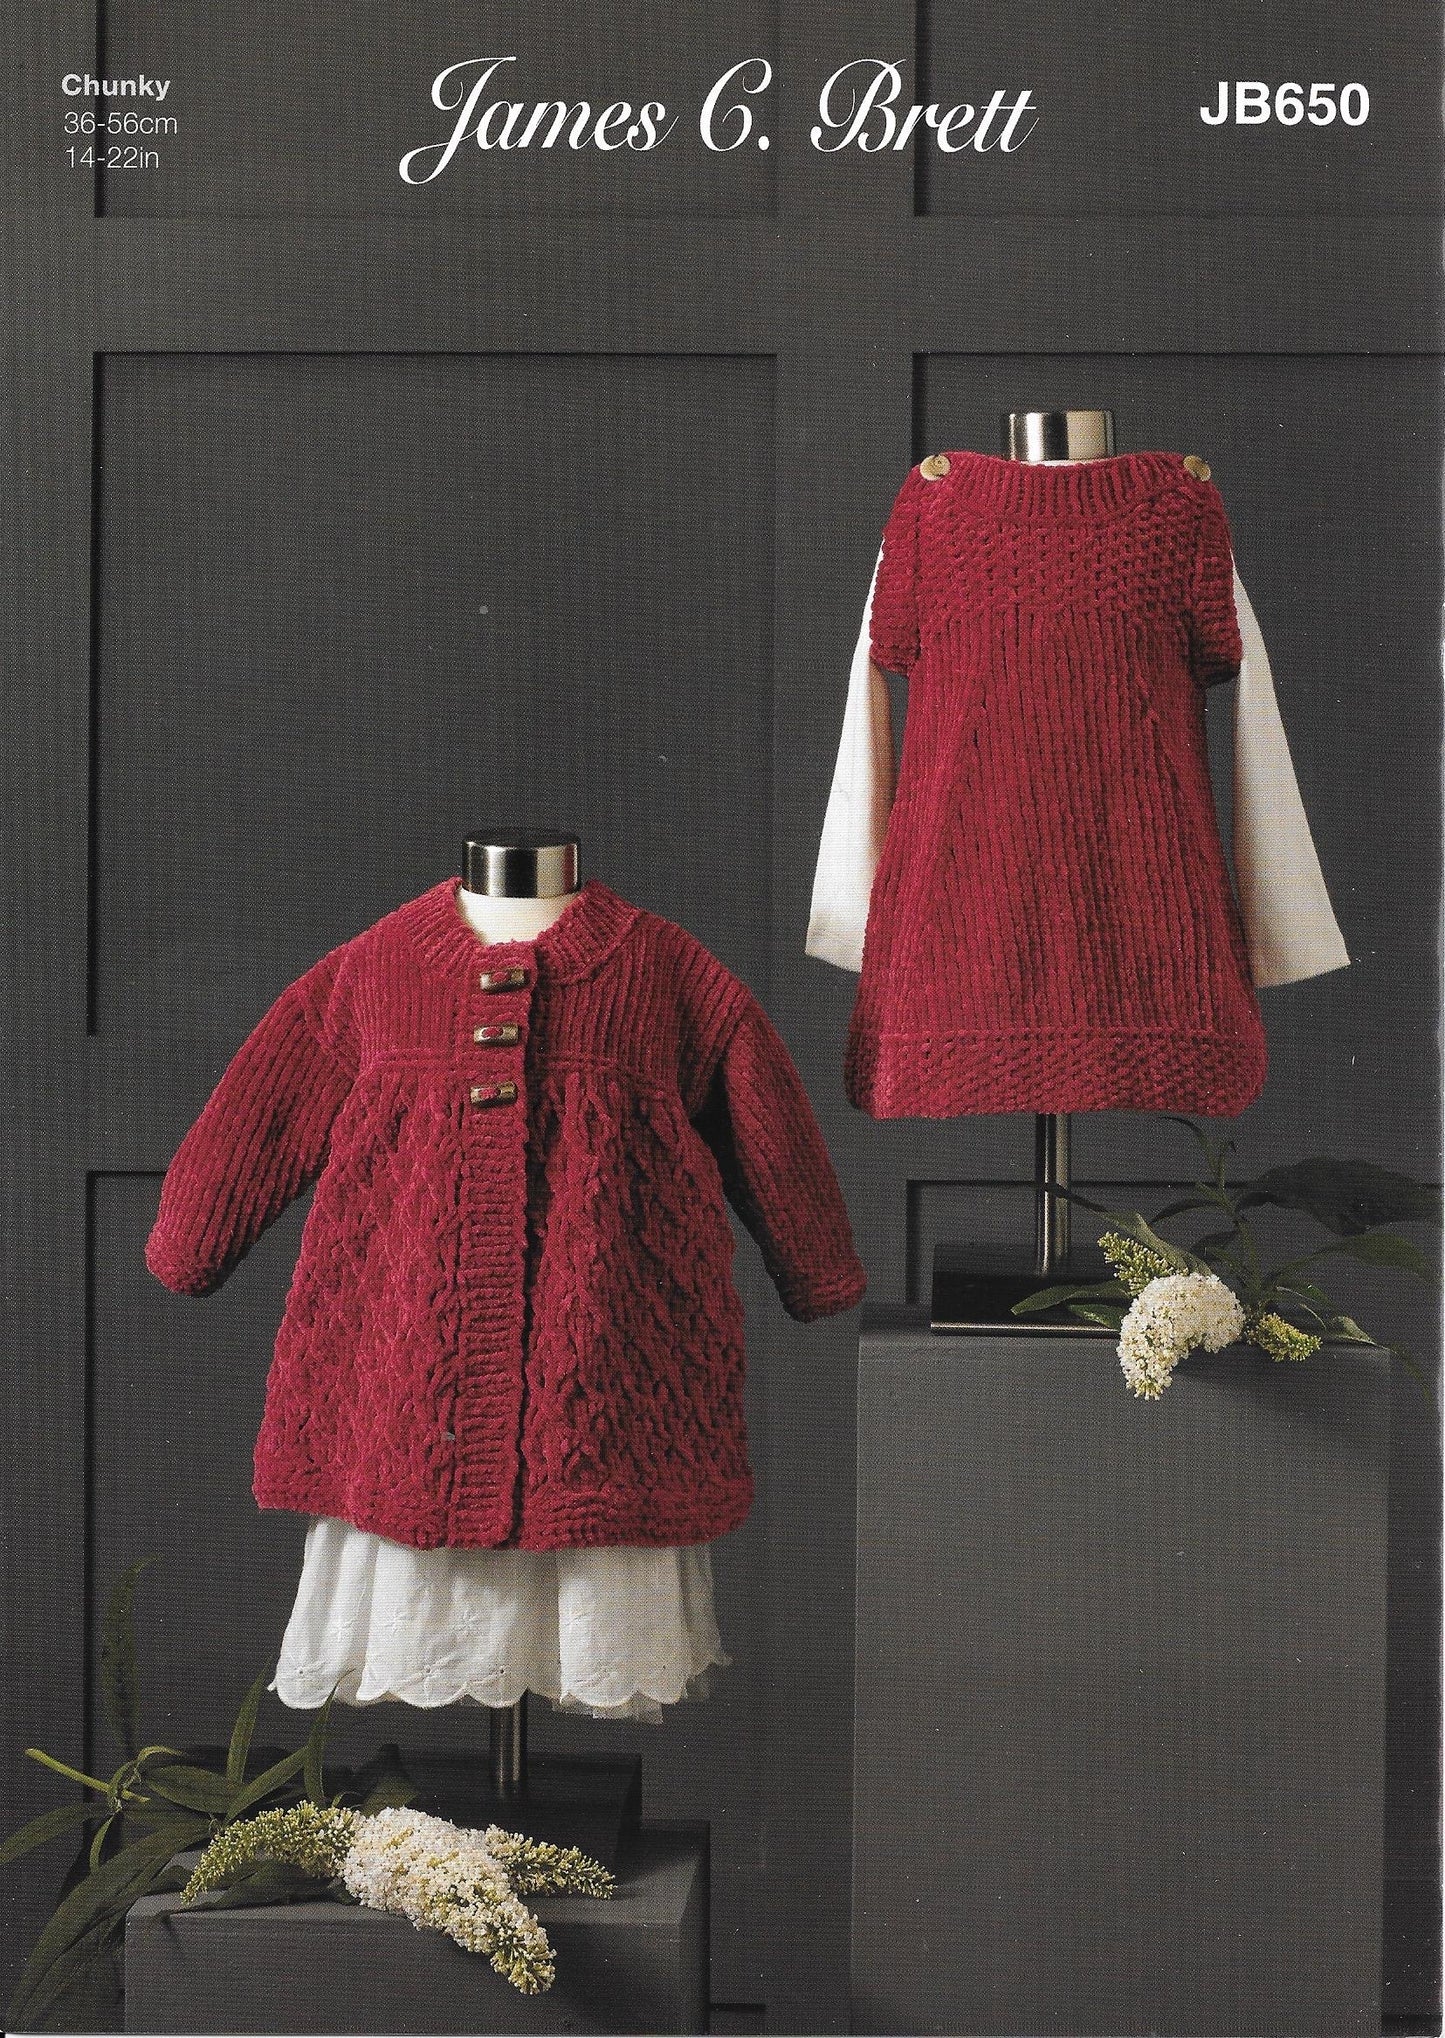 650 JB650 James C Brett Flutterby Chunky baby, girl dress and jacket knitting pattern